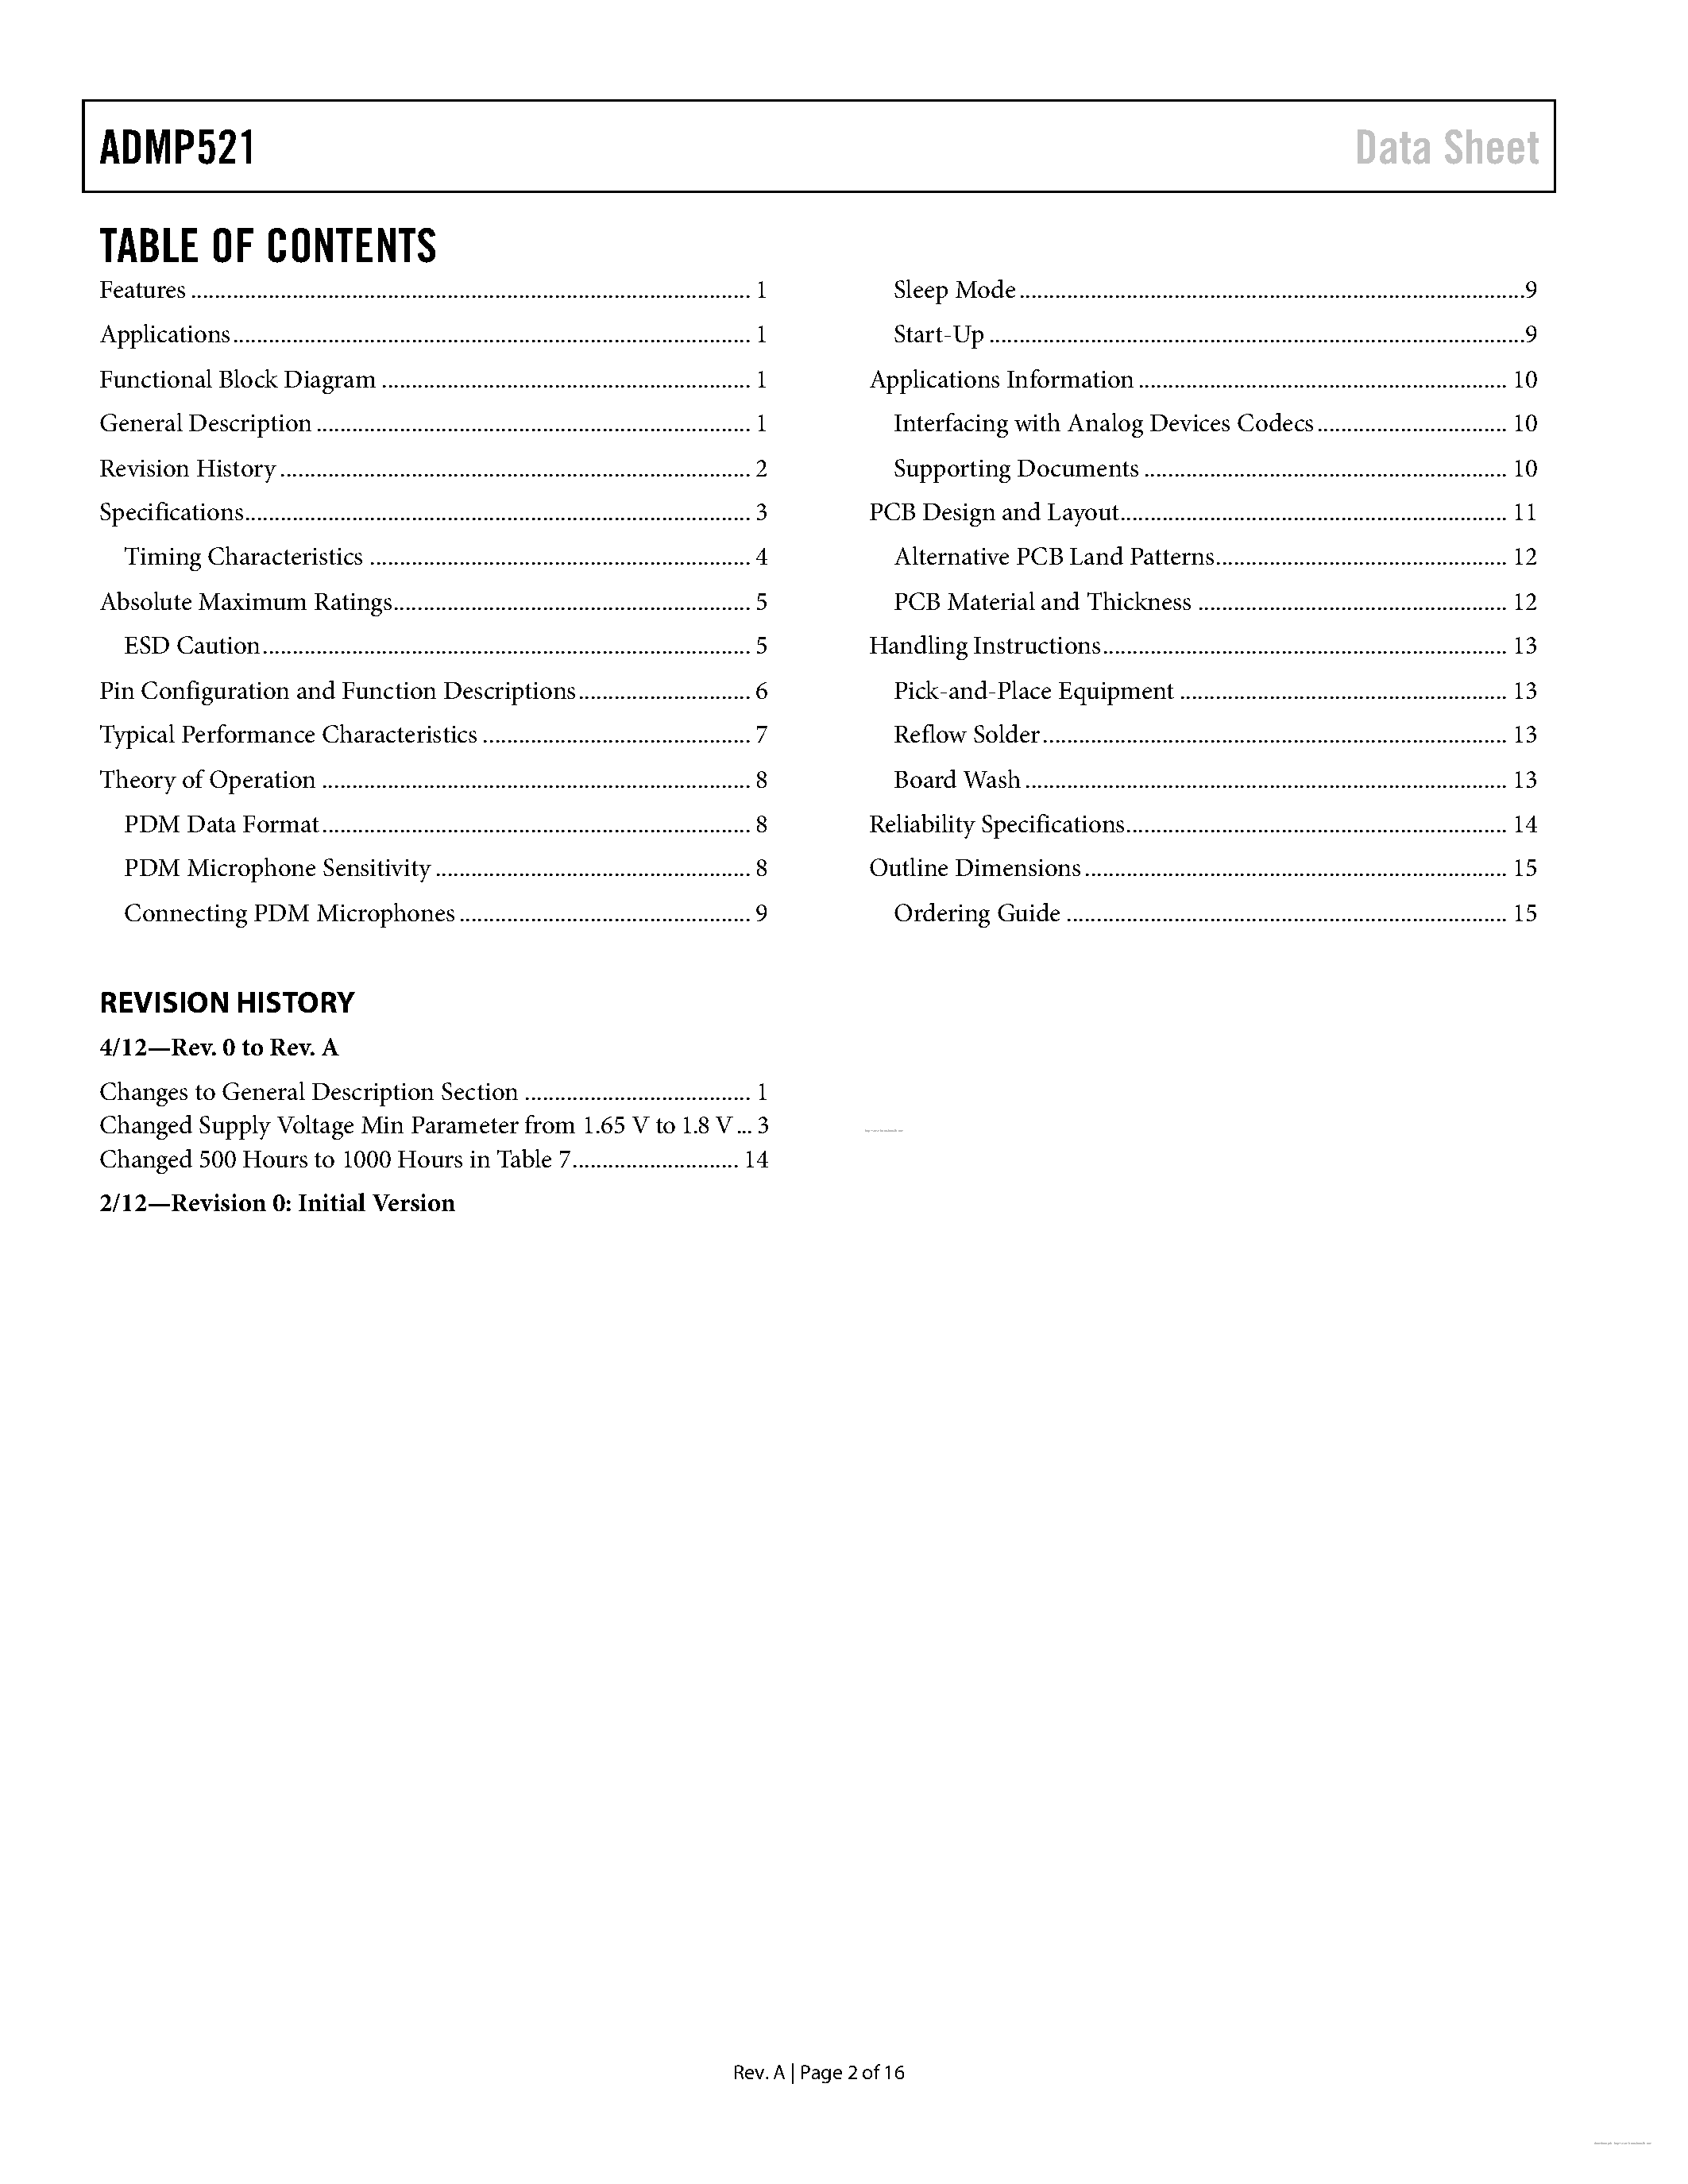 Datasheet ADMP521 - page 2